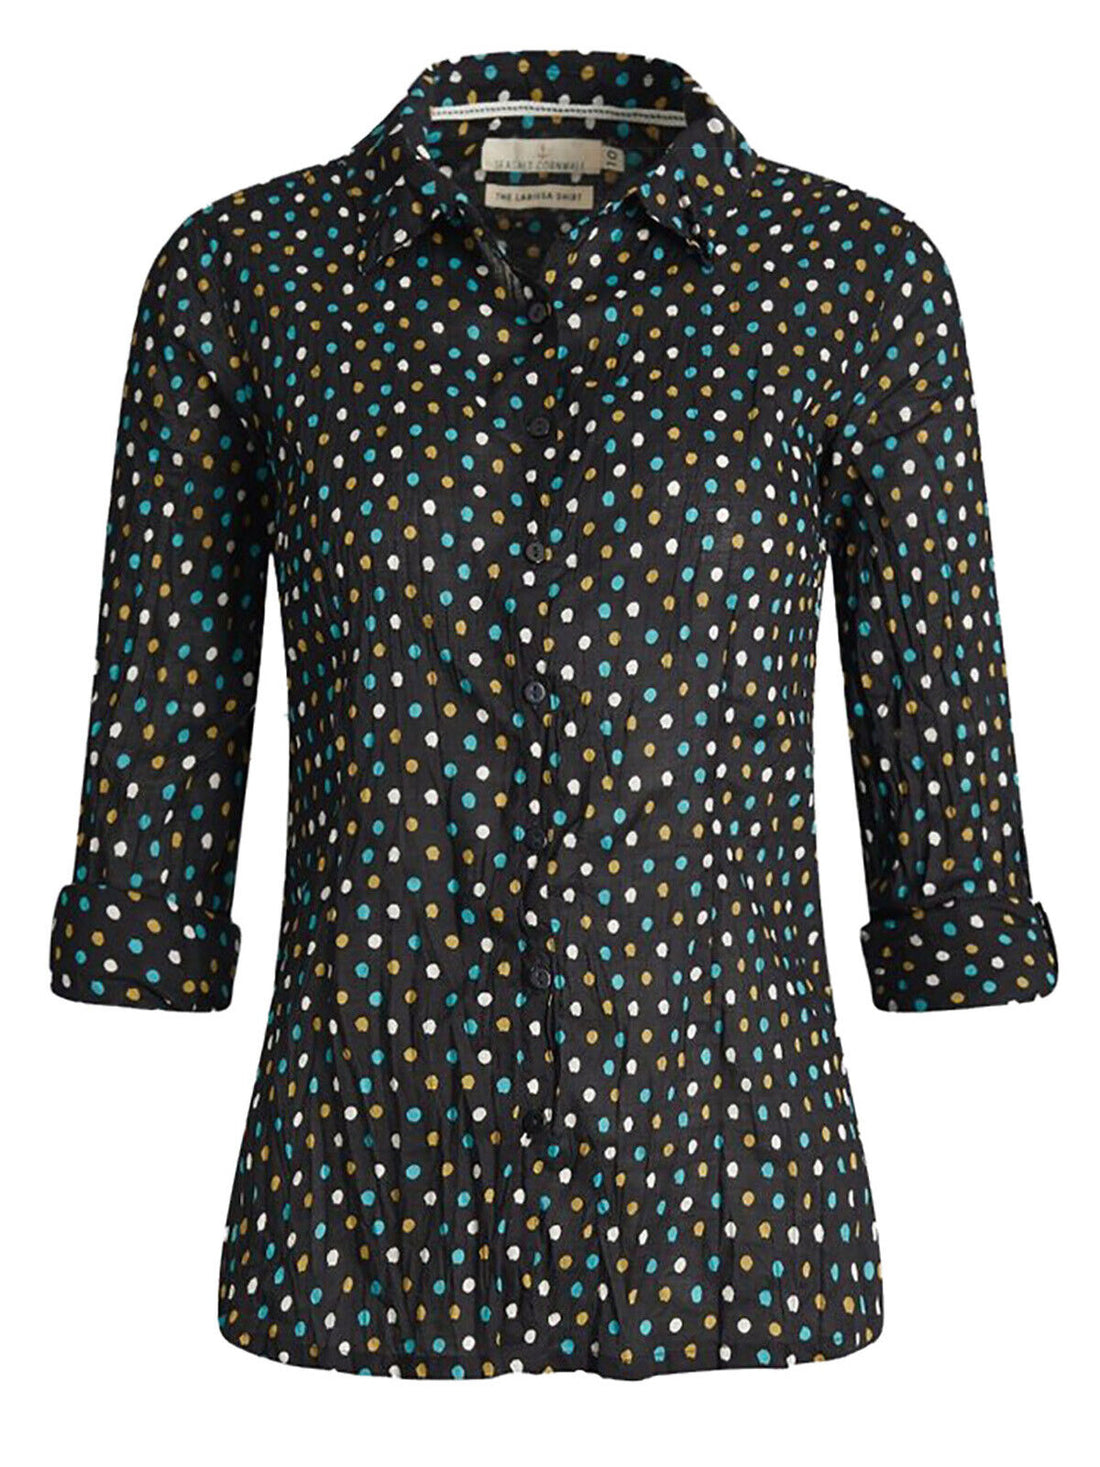 EX SEASALT Black Polka Dot Onyx Larissa Shirt in Size 8 RRP £42.95